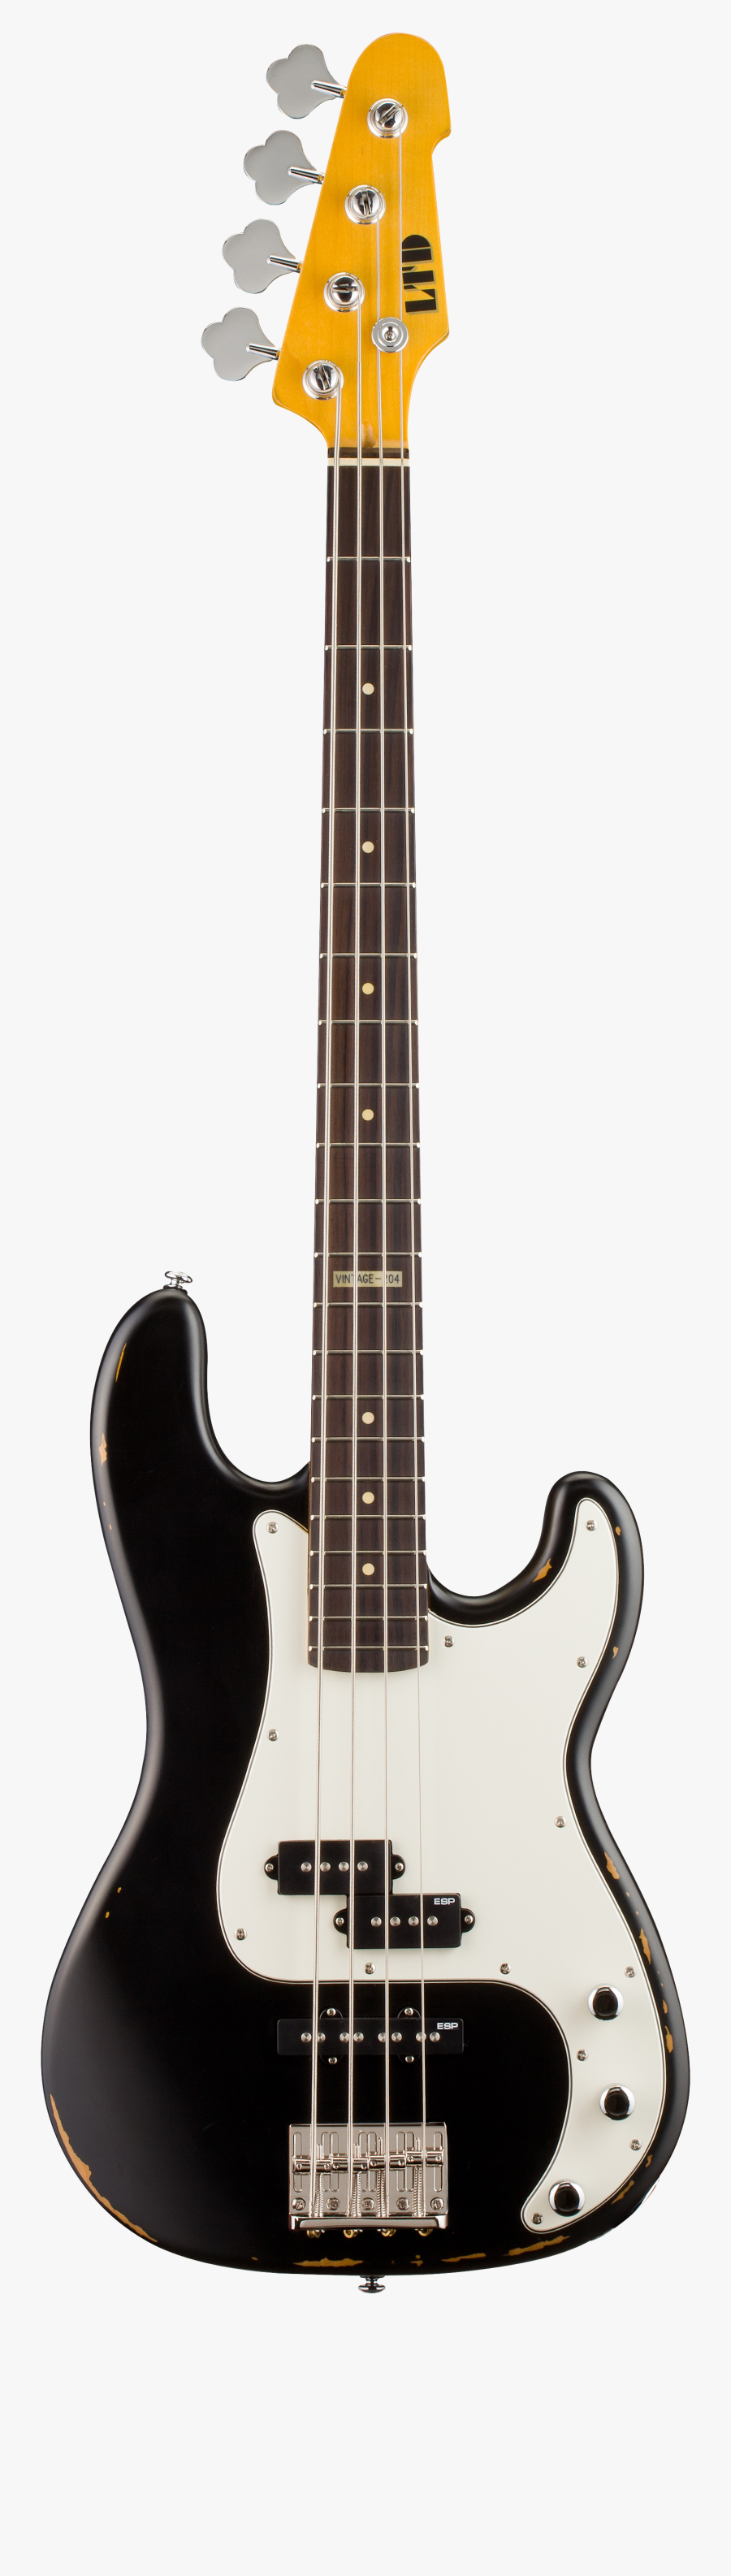 Electric Guitar Png Image - Black Fender Bass Guitar, Transparent Clipart